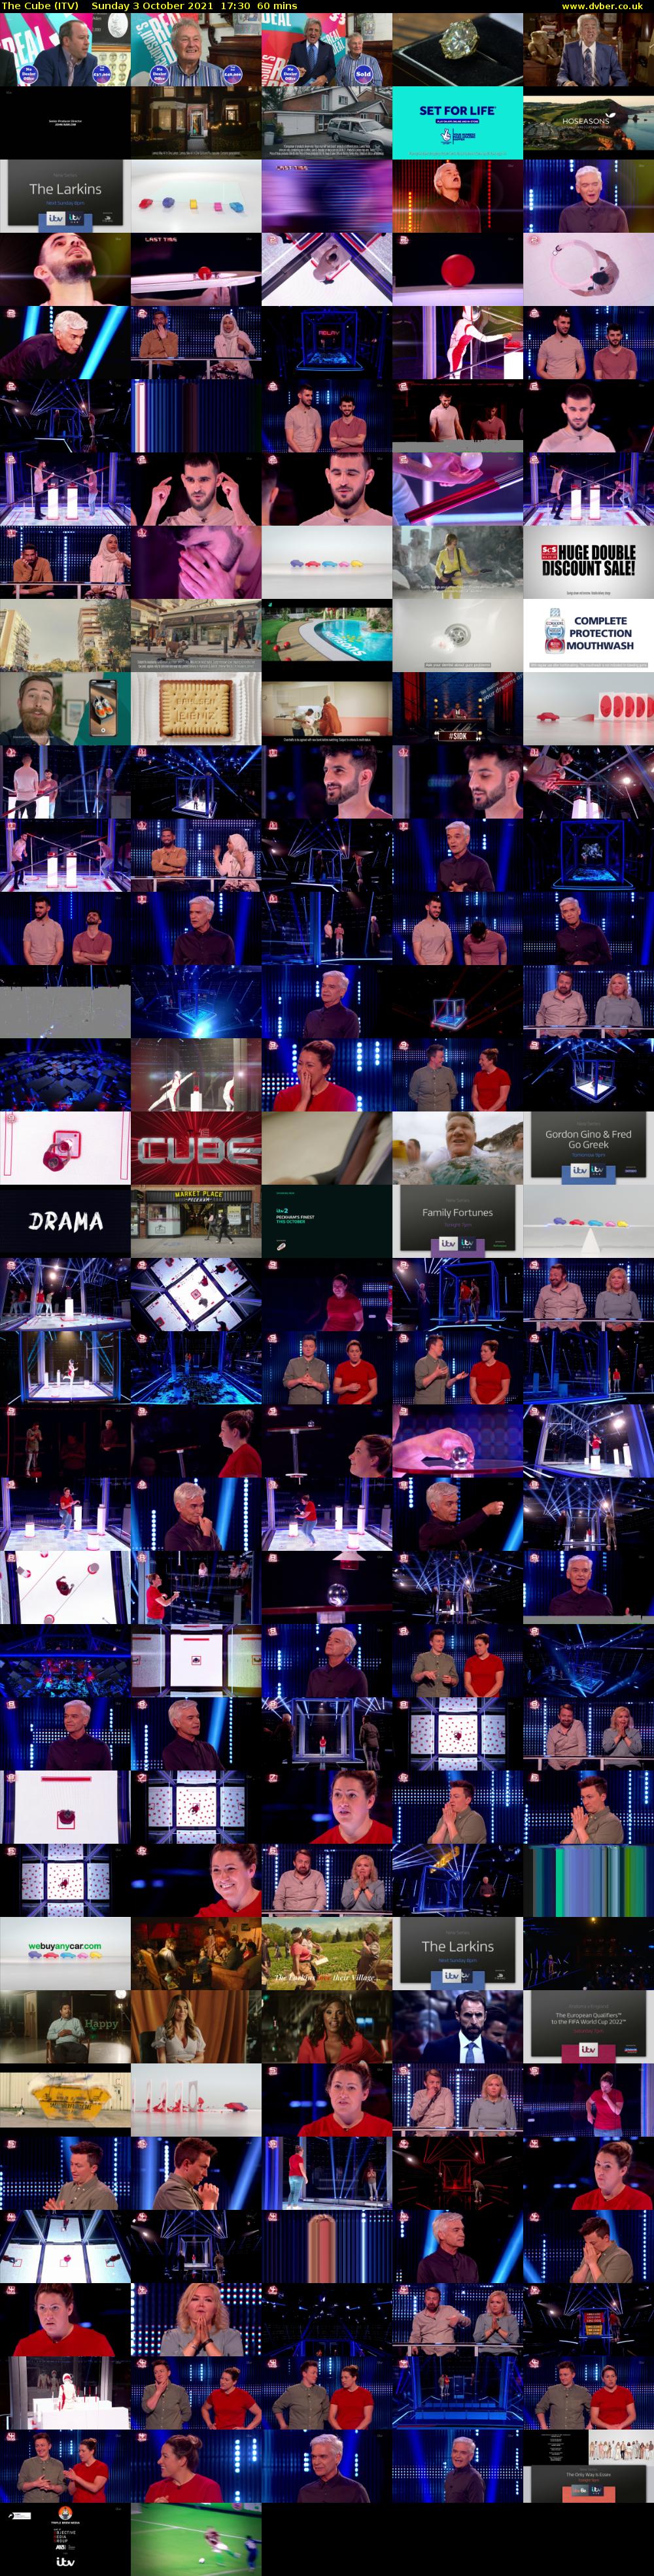 The Cube (ITV) Sunday 3 October 2021 17:30 - 18:30